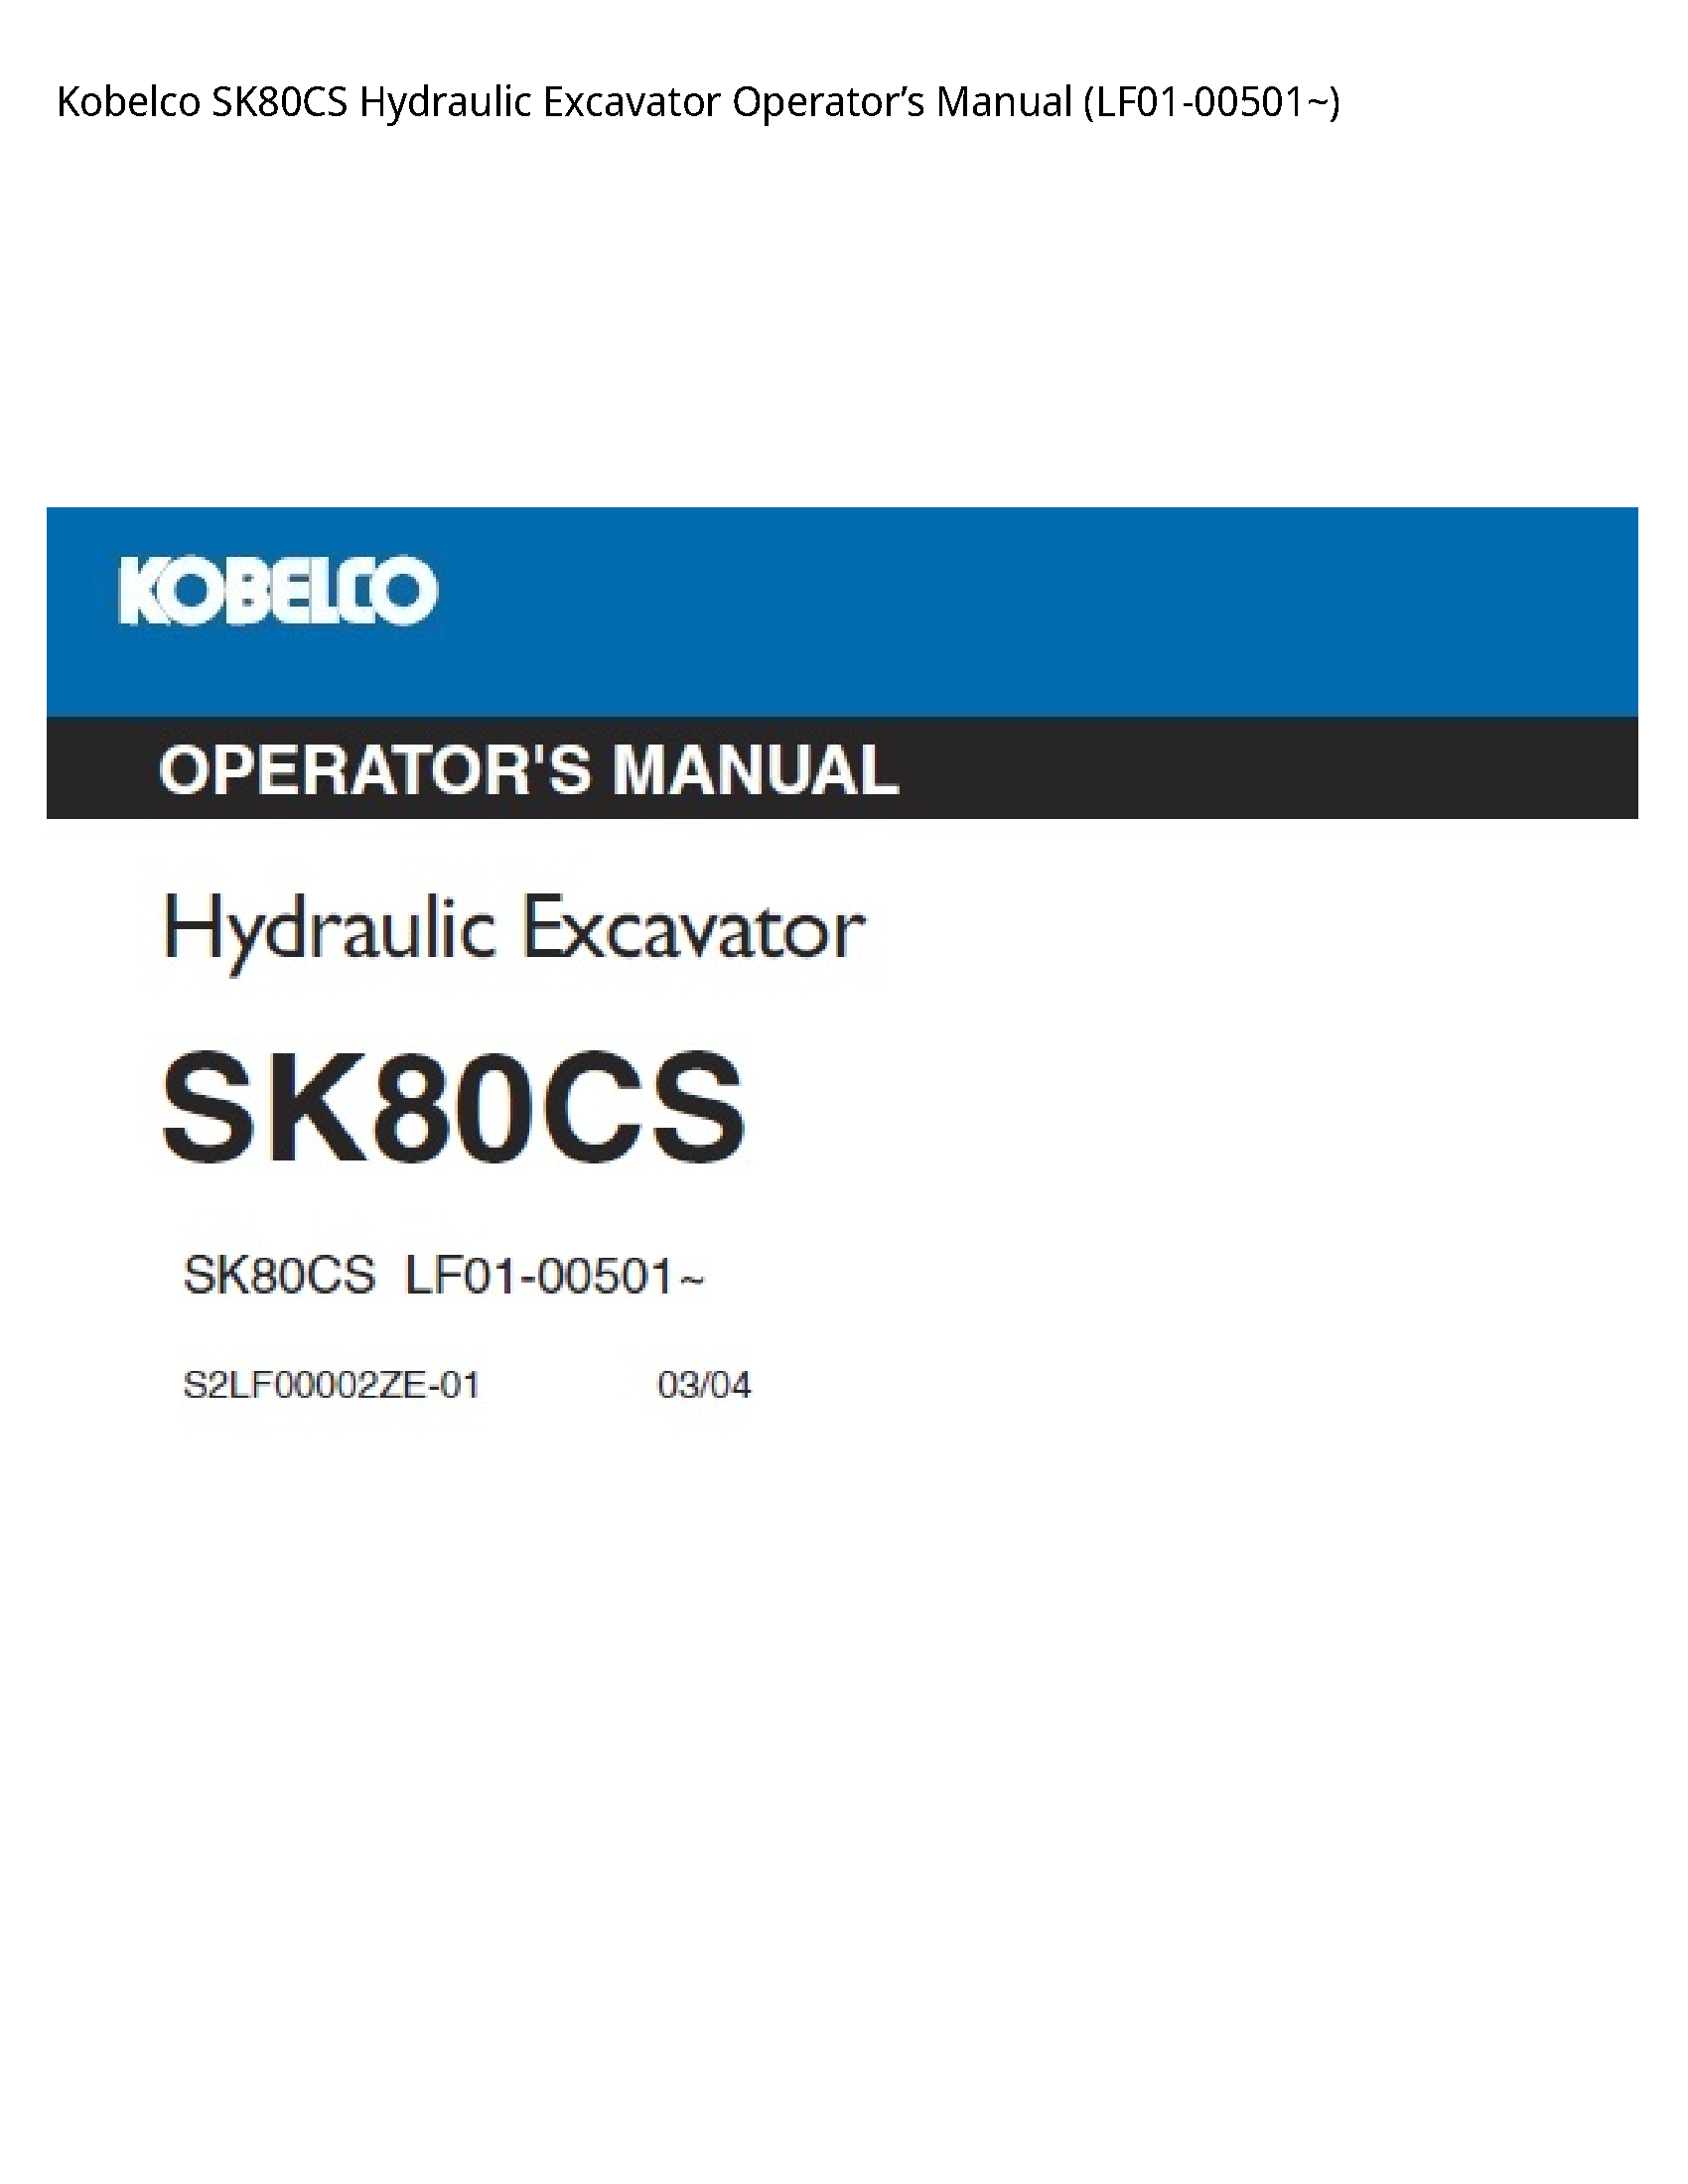 Kobelco SK80CS Hydraulic Excavator Operator’s manual